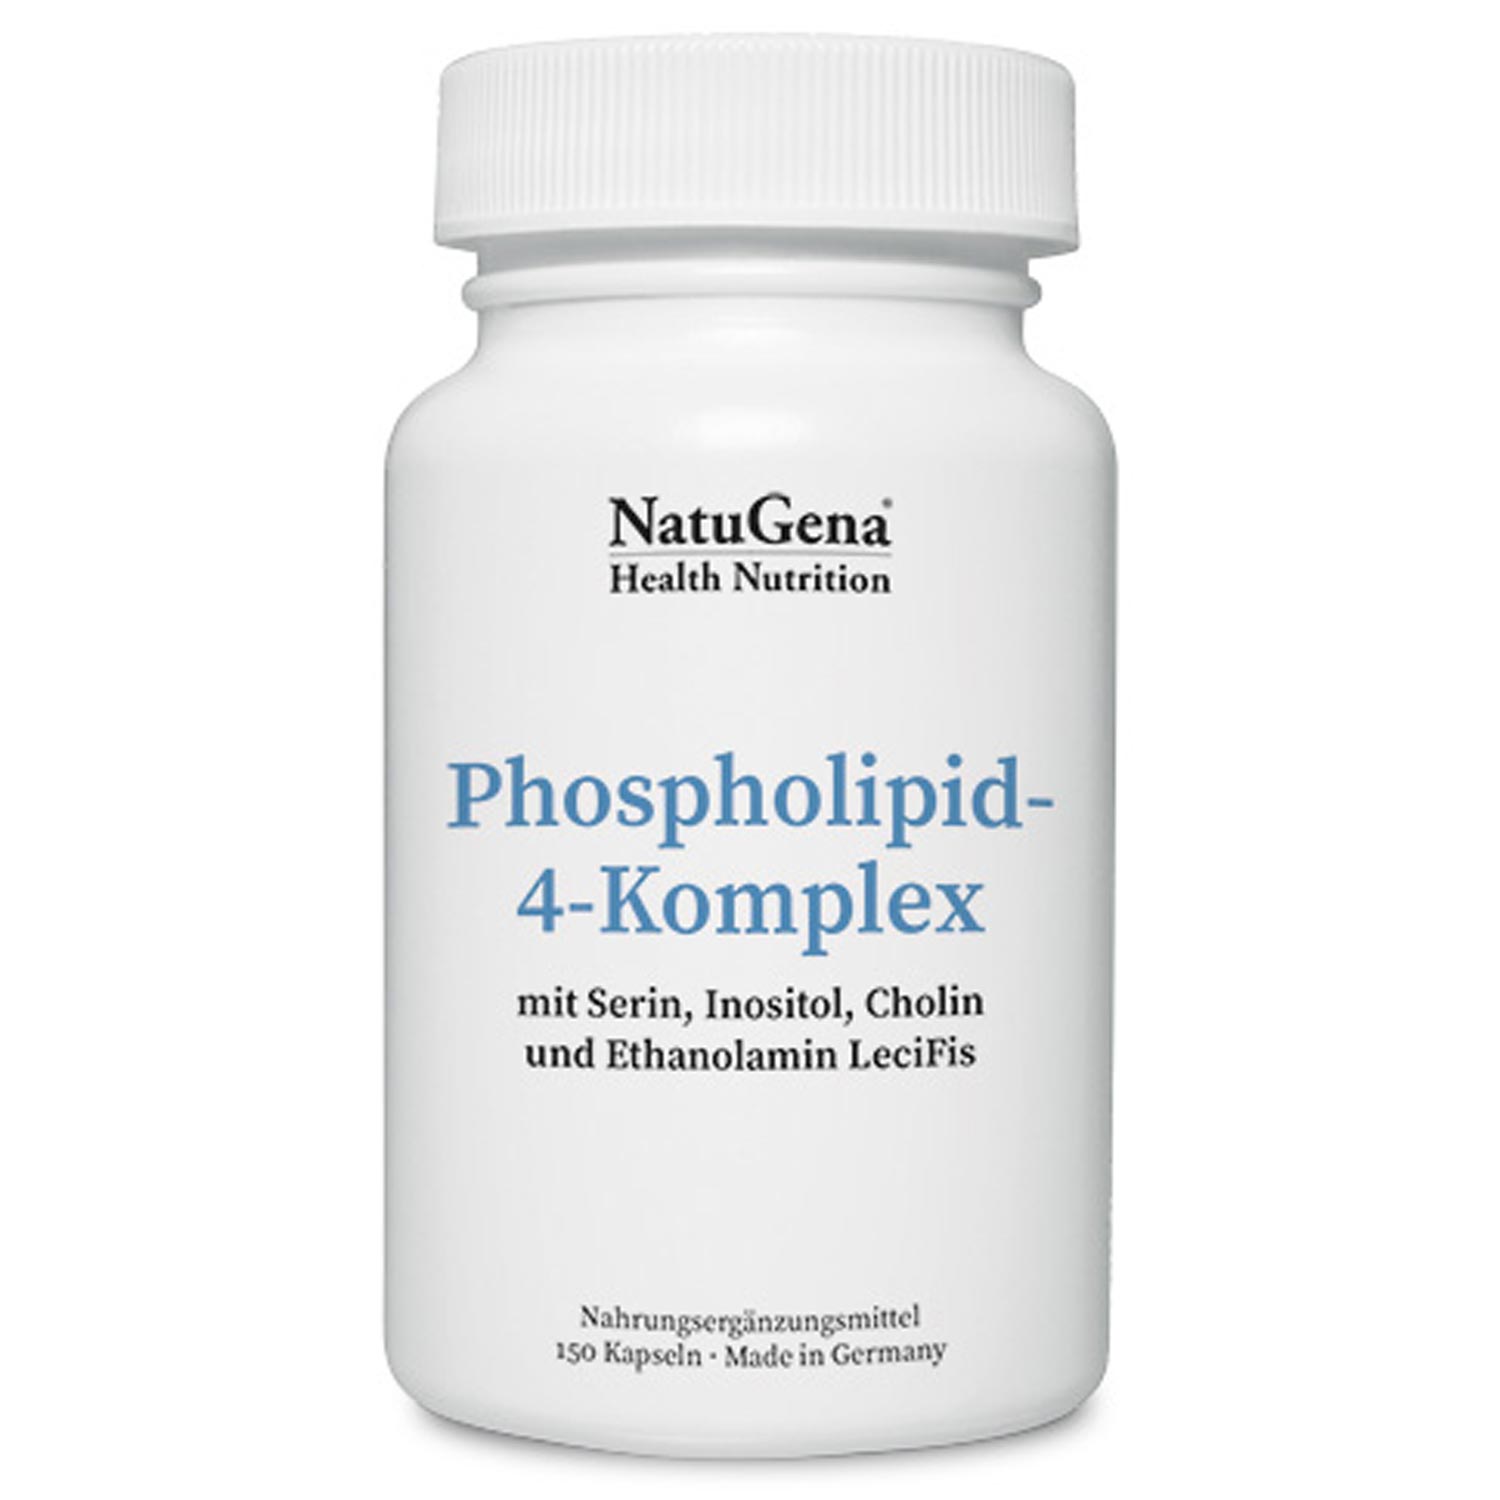 Phospholipid-4-Komplex von NatuGena - 150 Kapseln